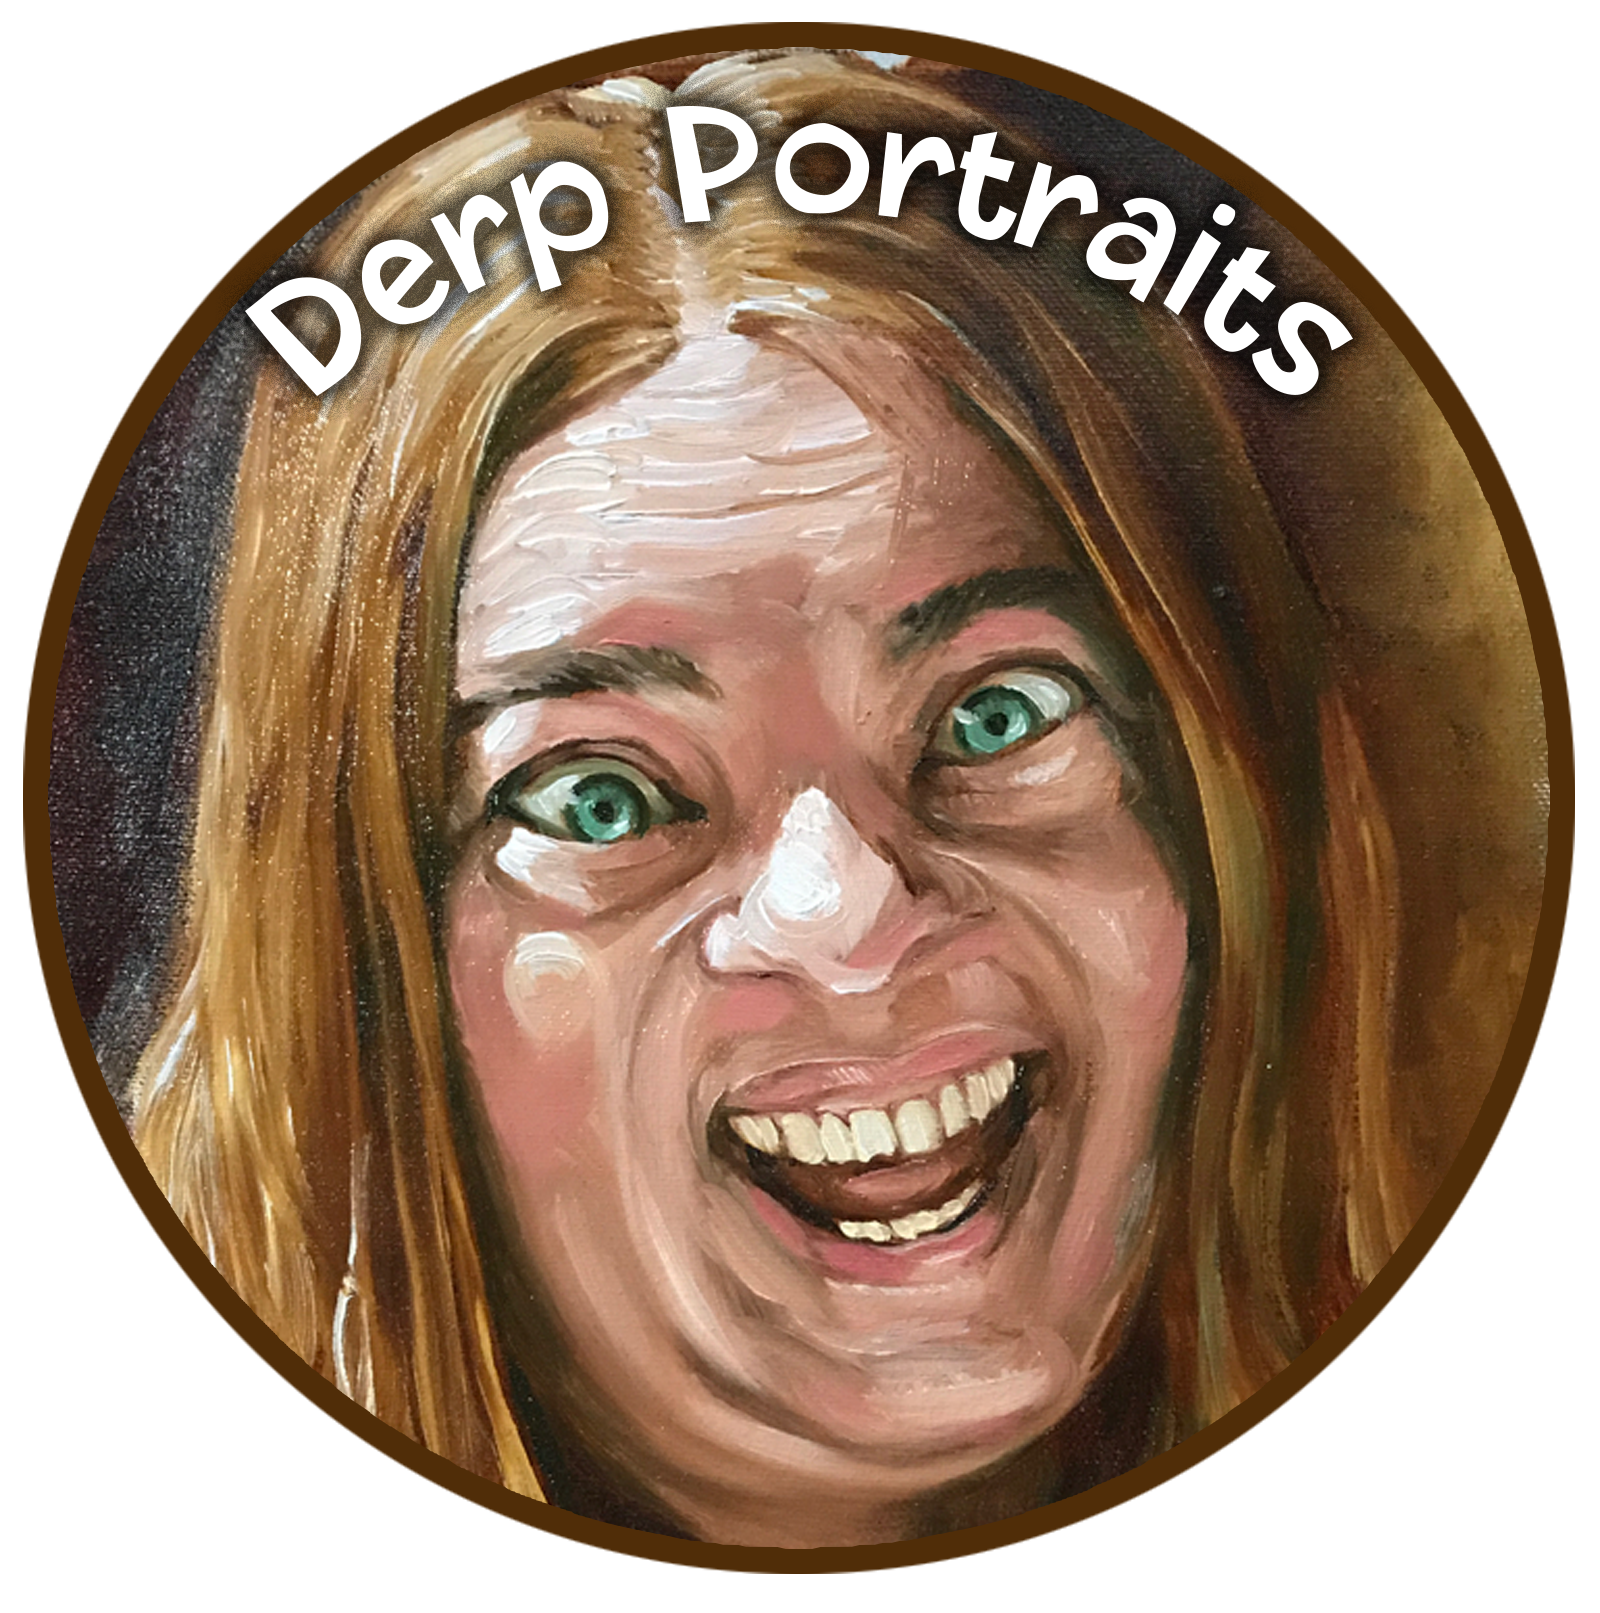 Make 100 Derp Portraits!